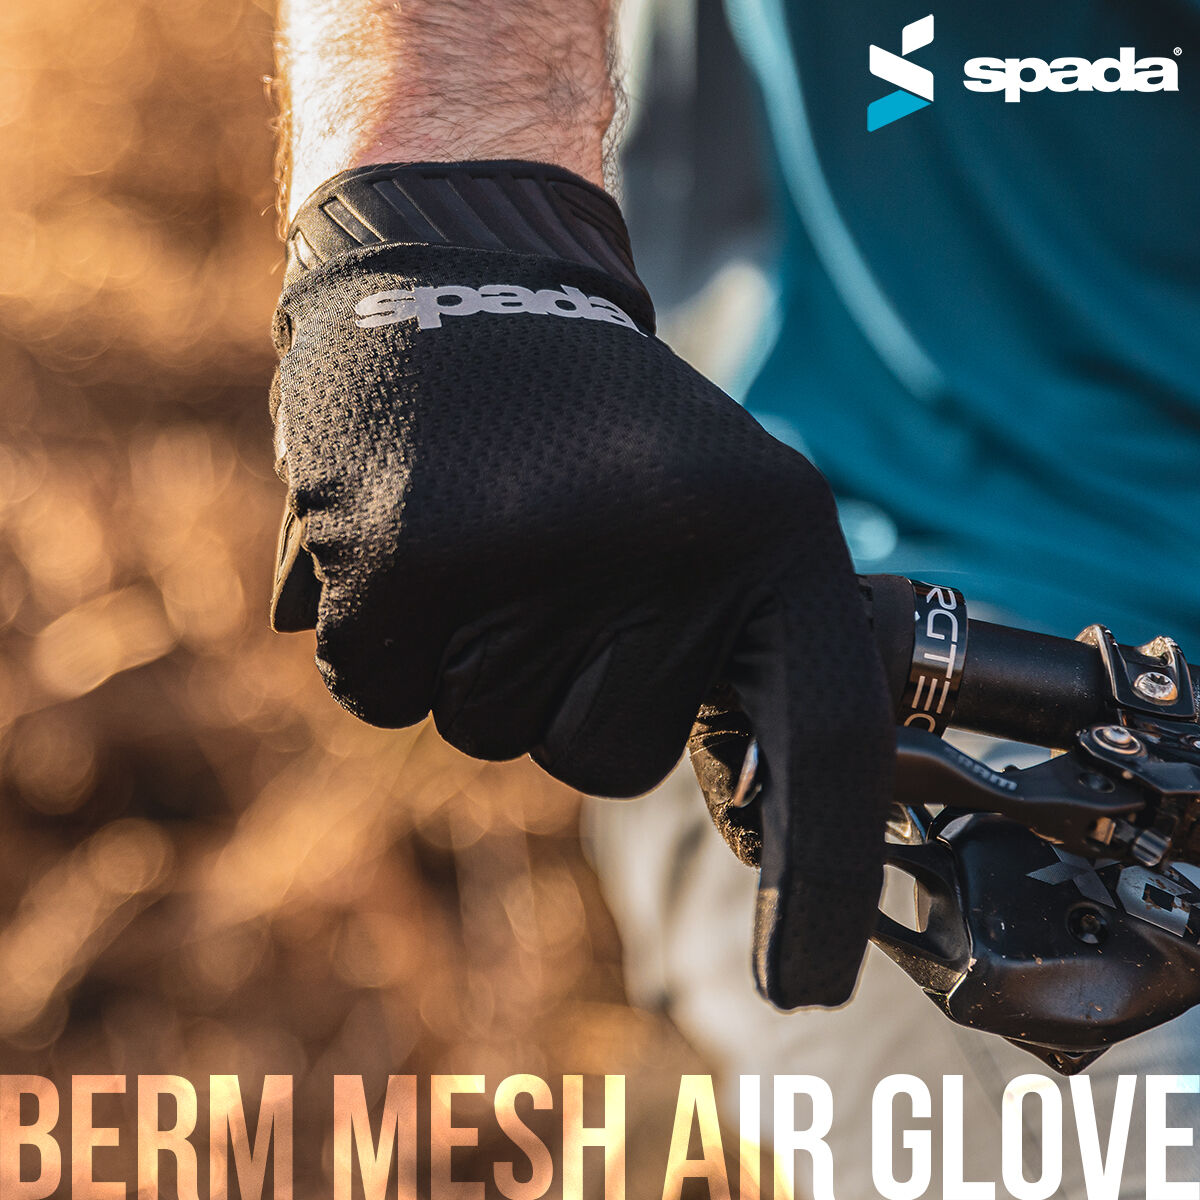 Get a grip with the Spada Berm Mesh Air Glove.

Shop the gloves here: bit.ly/3ysDruM

#spadauk #spadaclothing #spadaclothinguk #mtb #mtblife #mtblove #mountainbike #spadamtb #mtbgloves #gloves #bikegloves #bikinggloves #mtbclothing